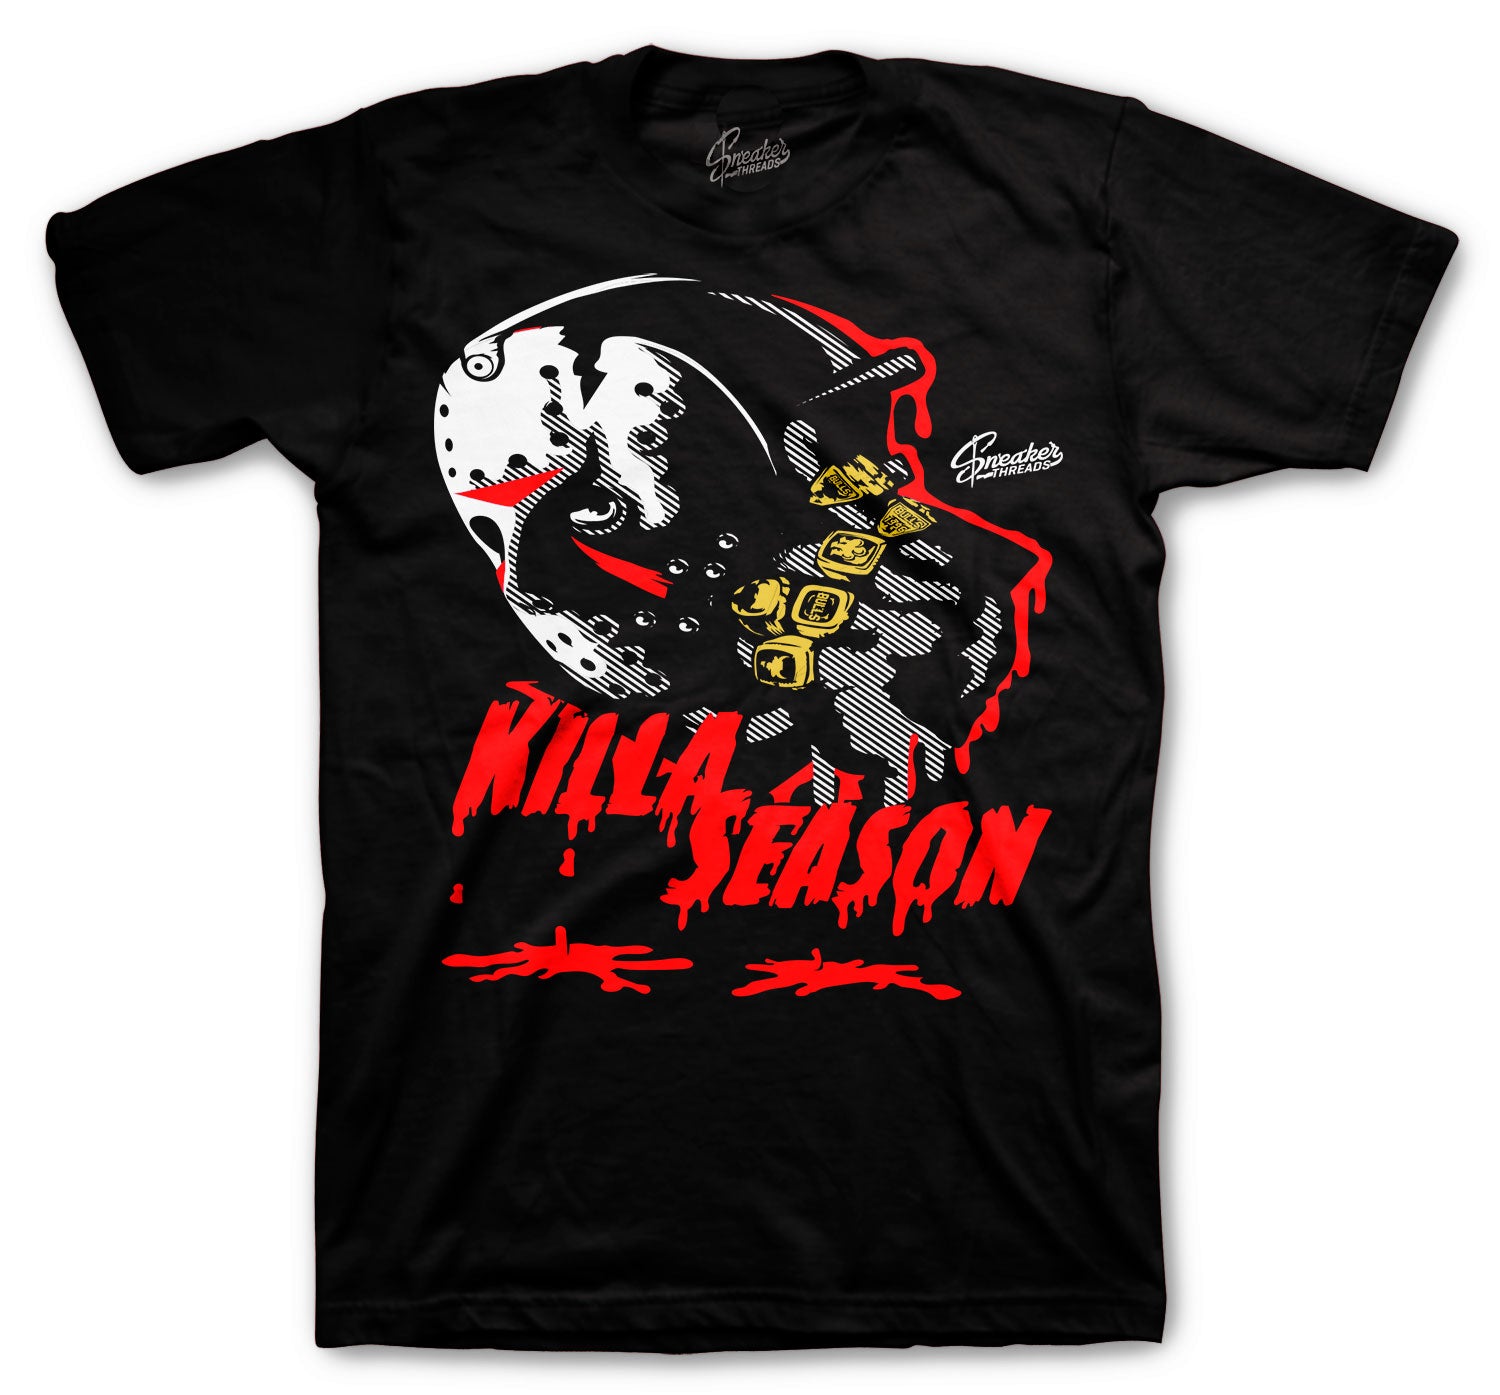 Retro 12 Super Bowl Shirt - Killa Season - Black